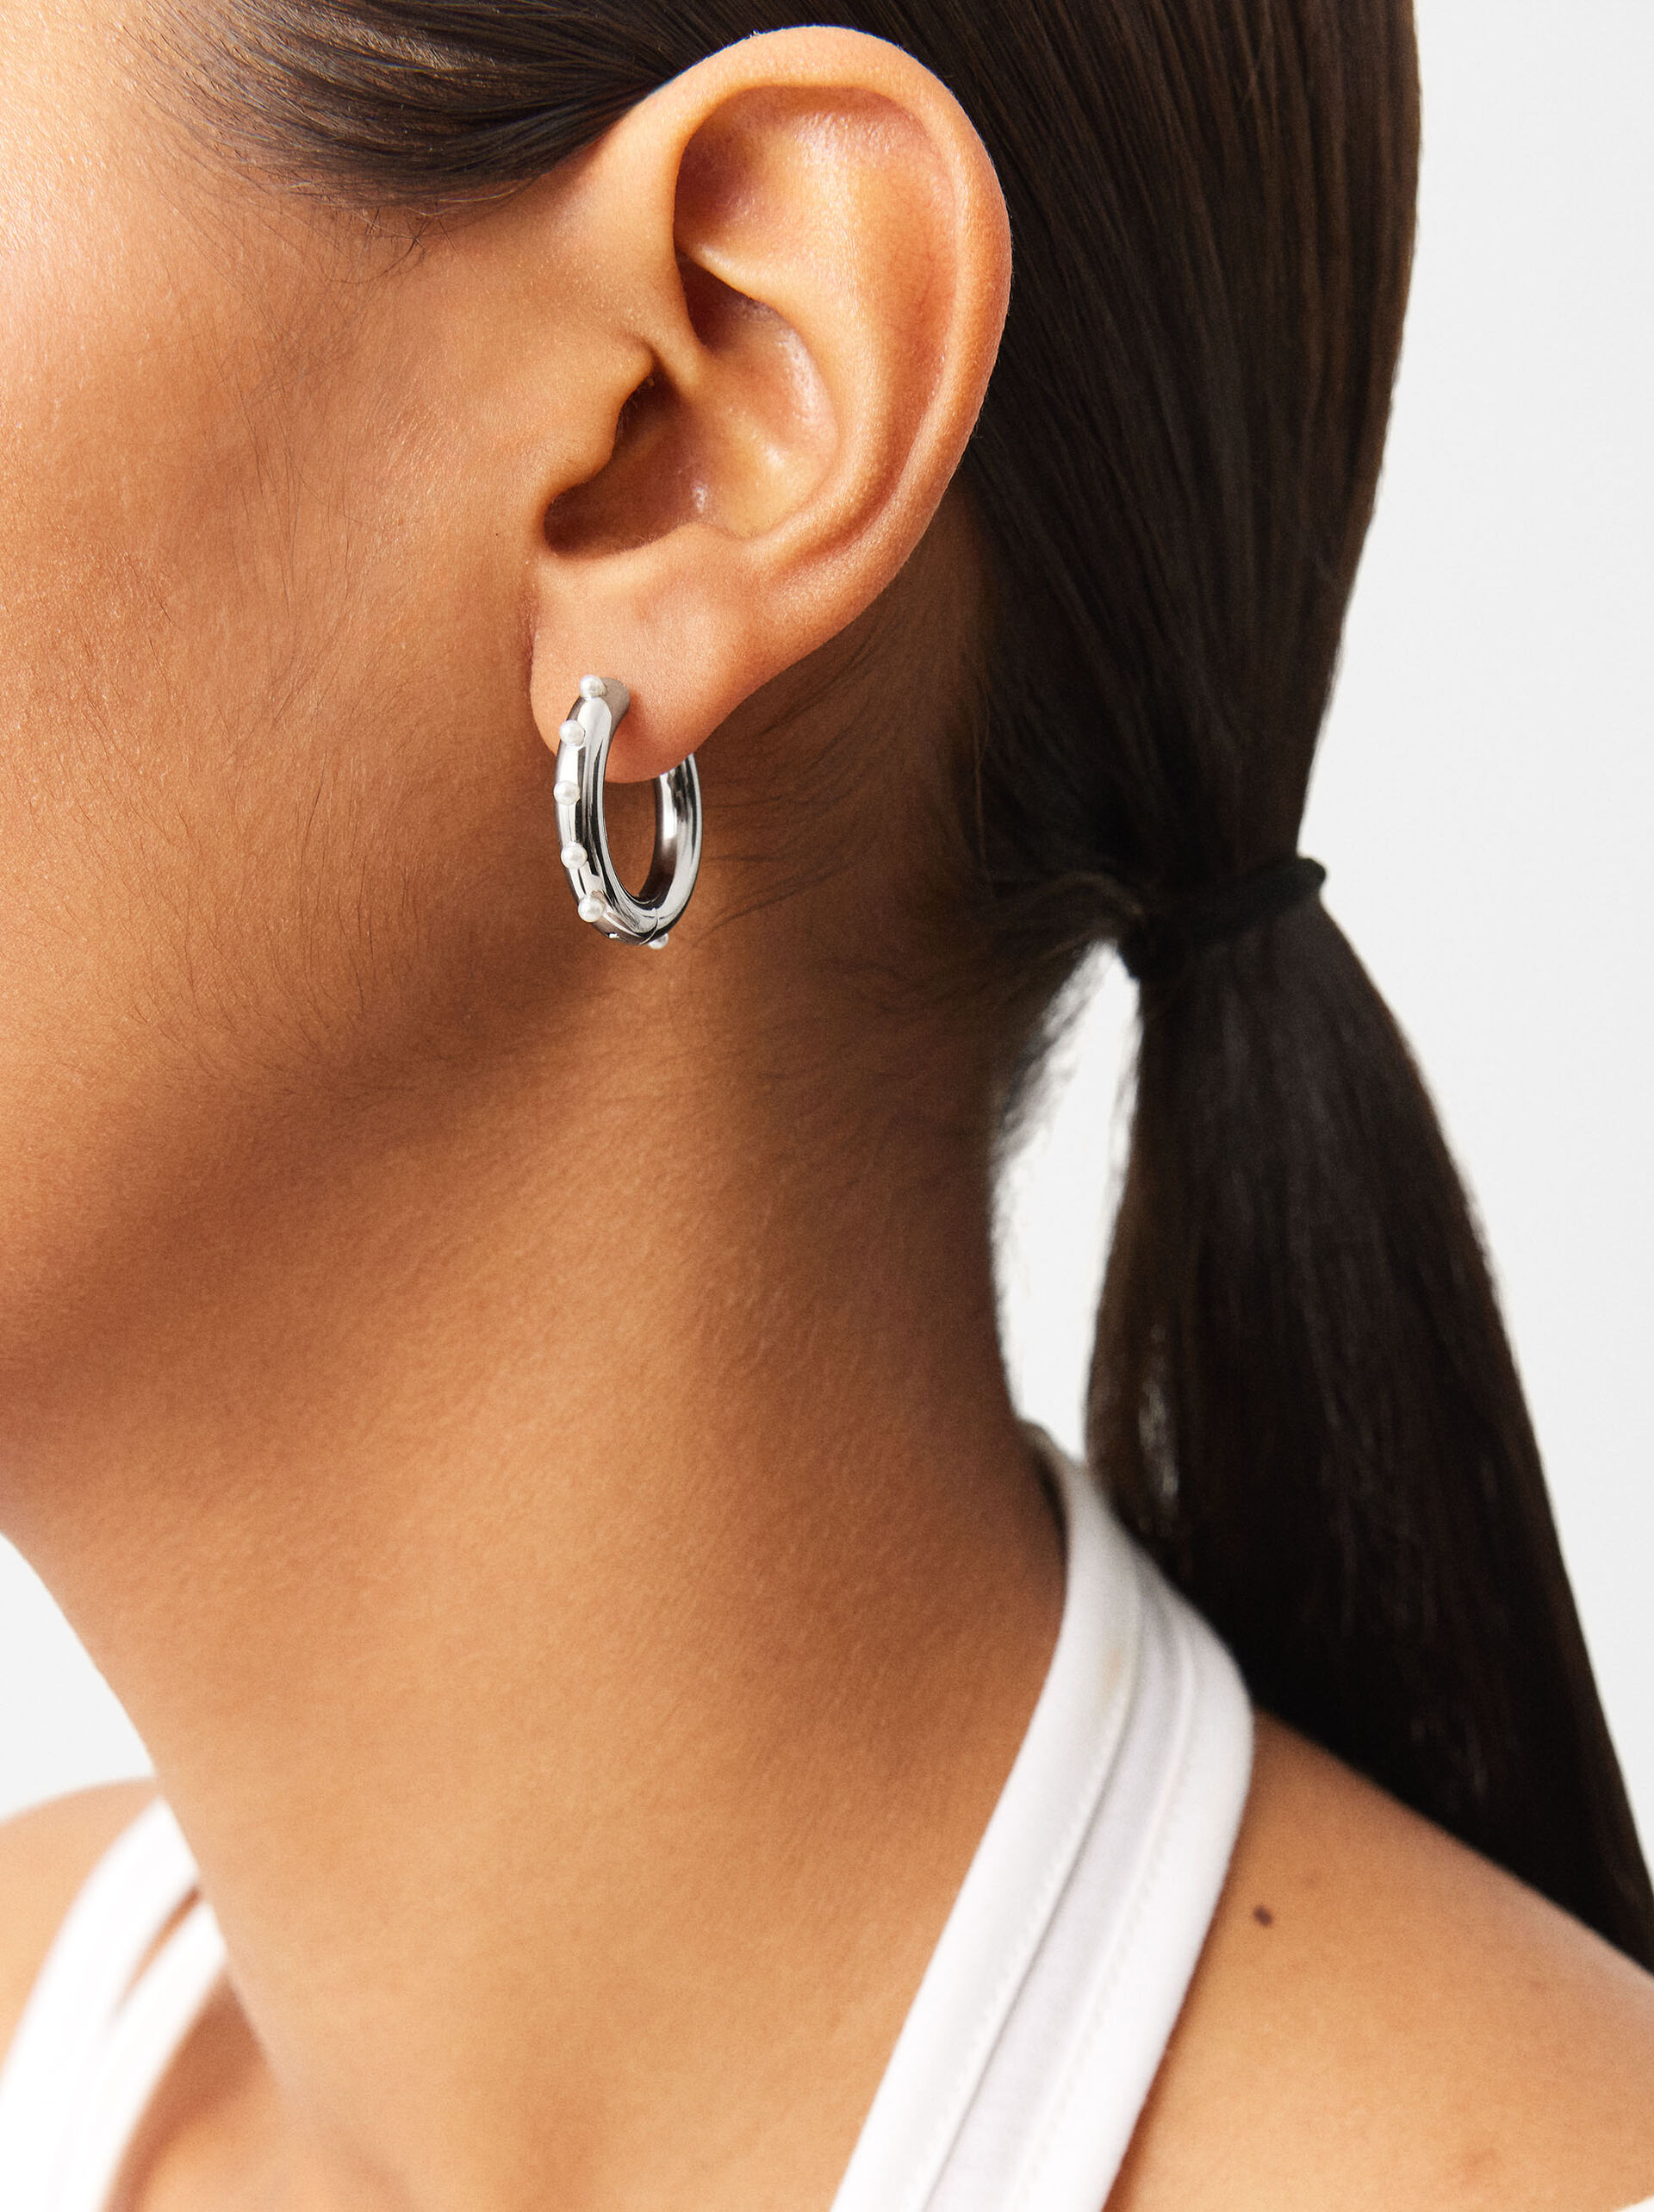 Stainless Steel Hoops Earrings With Pearls image number 1.0